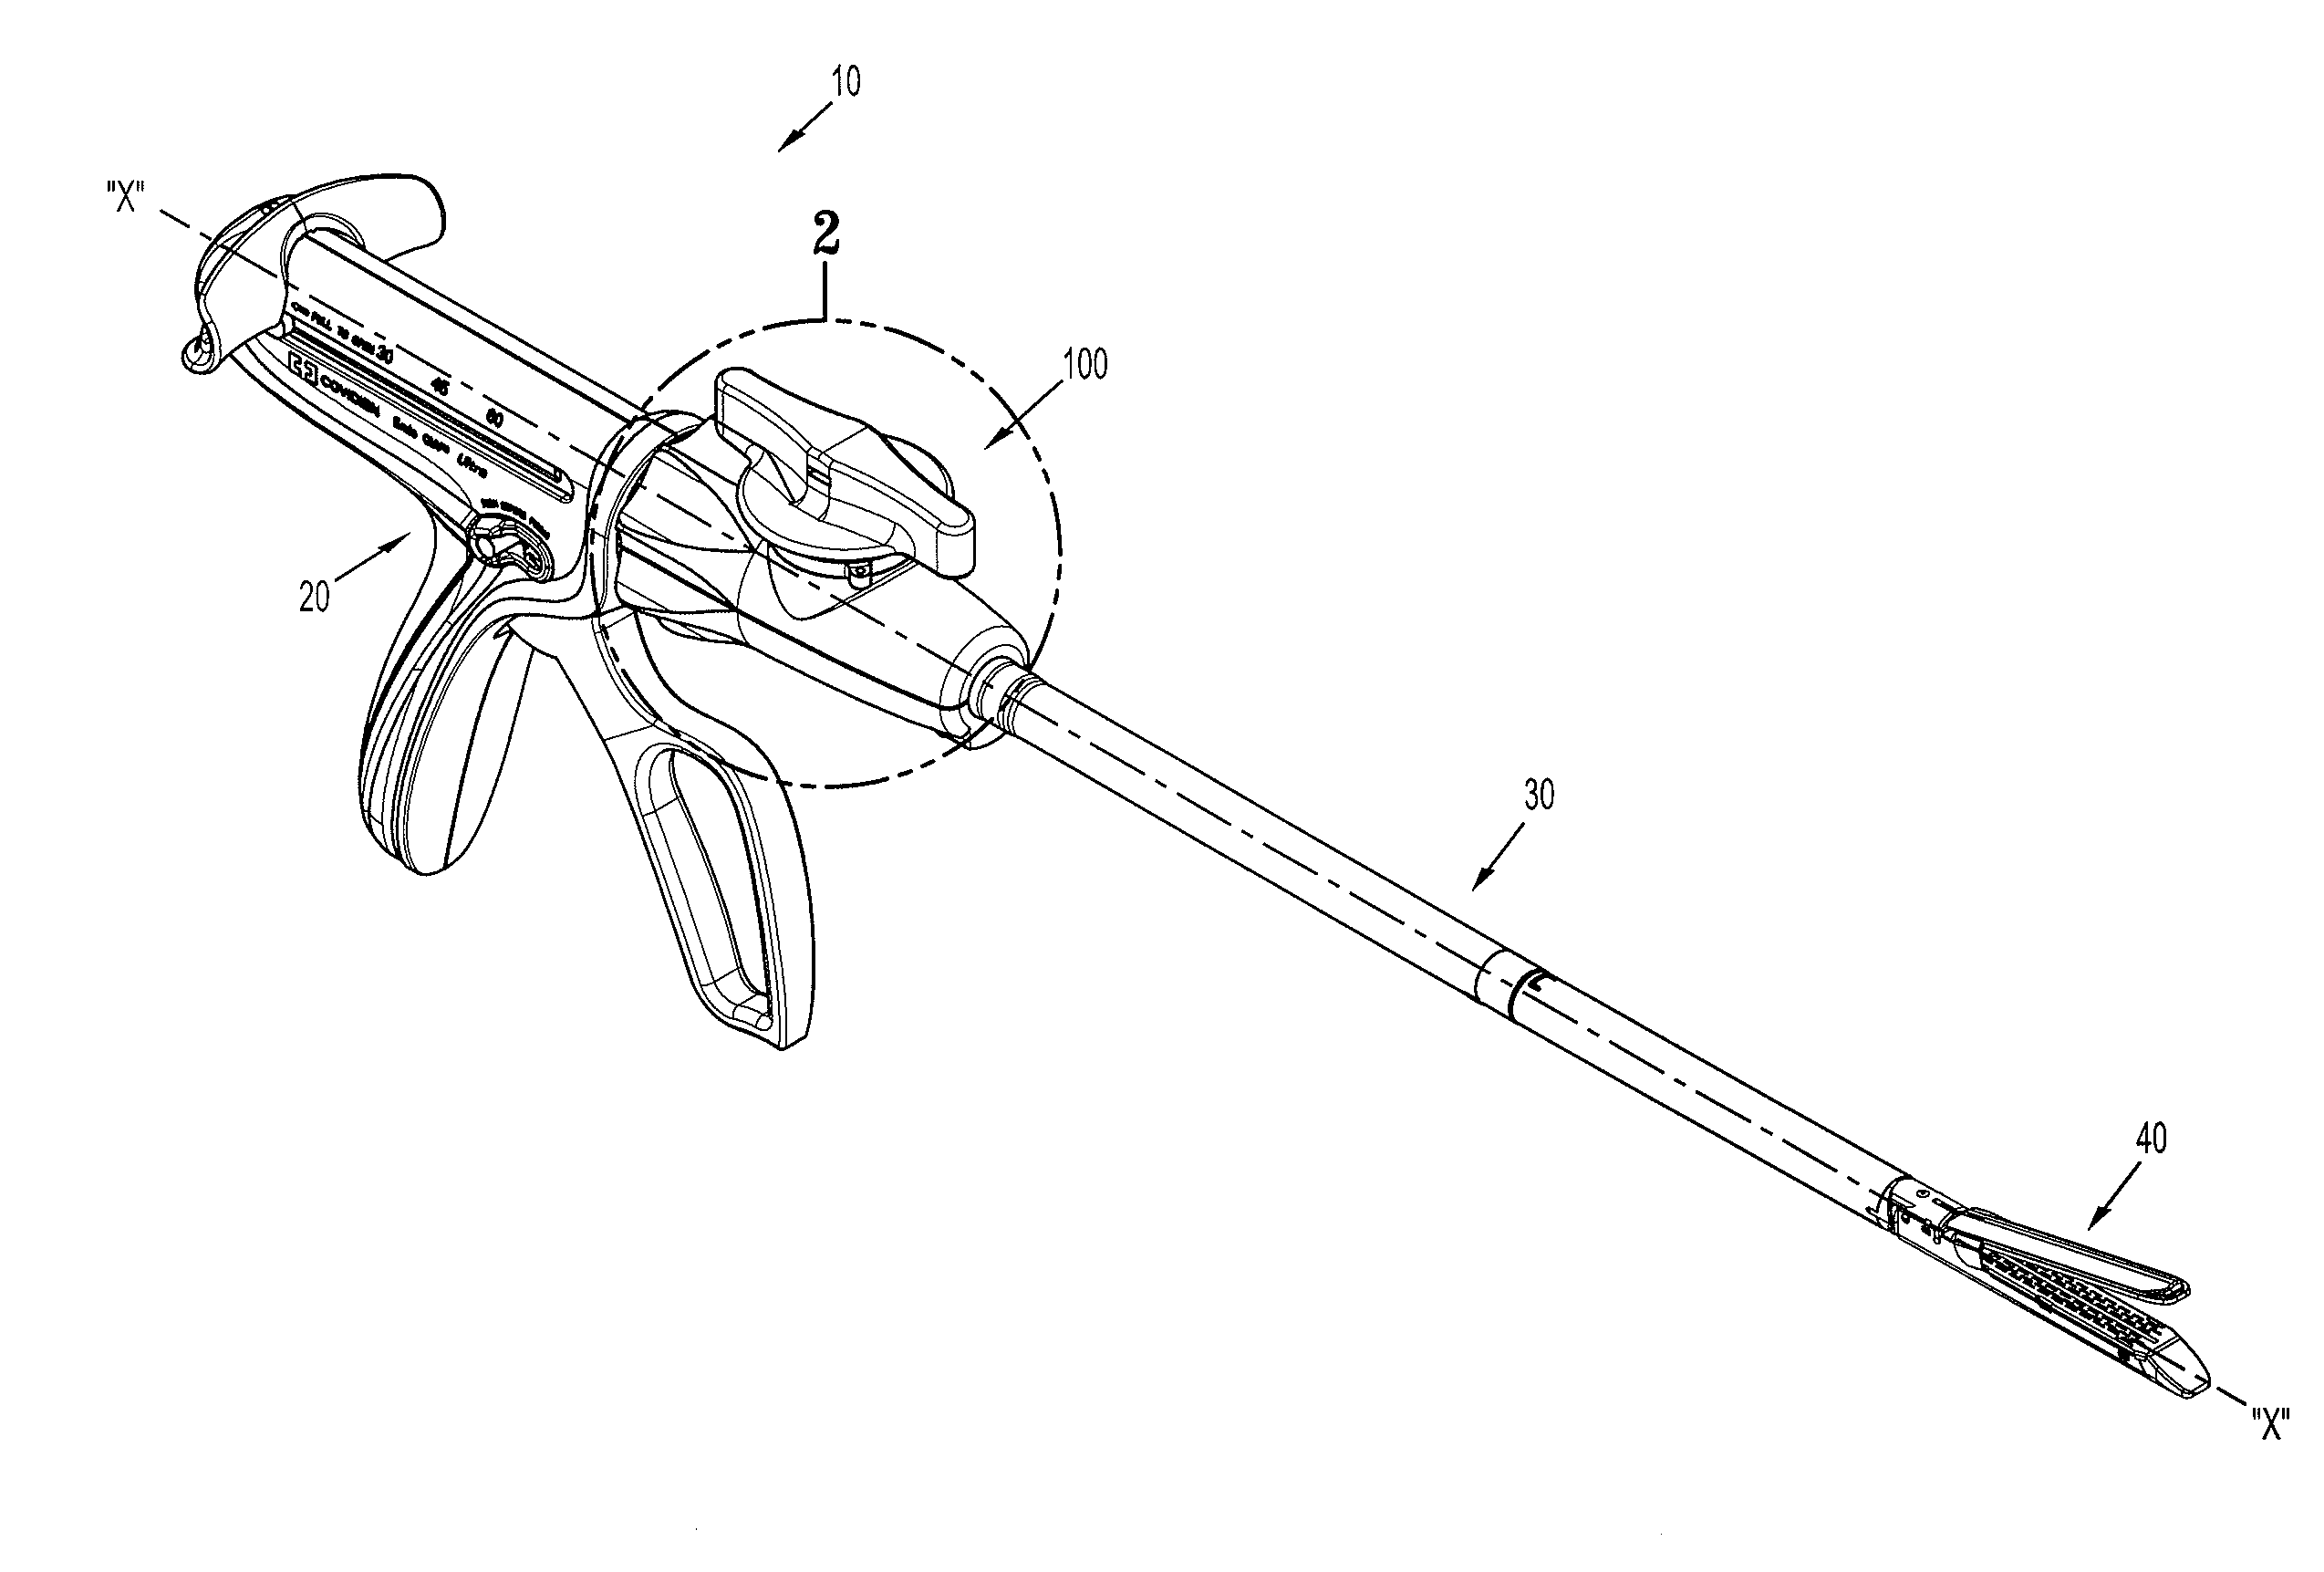 Locking articulation mechanism for surgical stapler